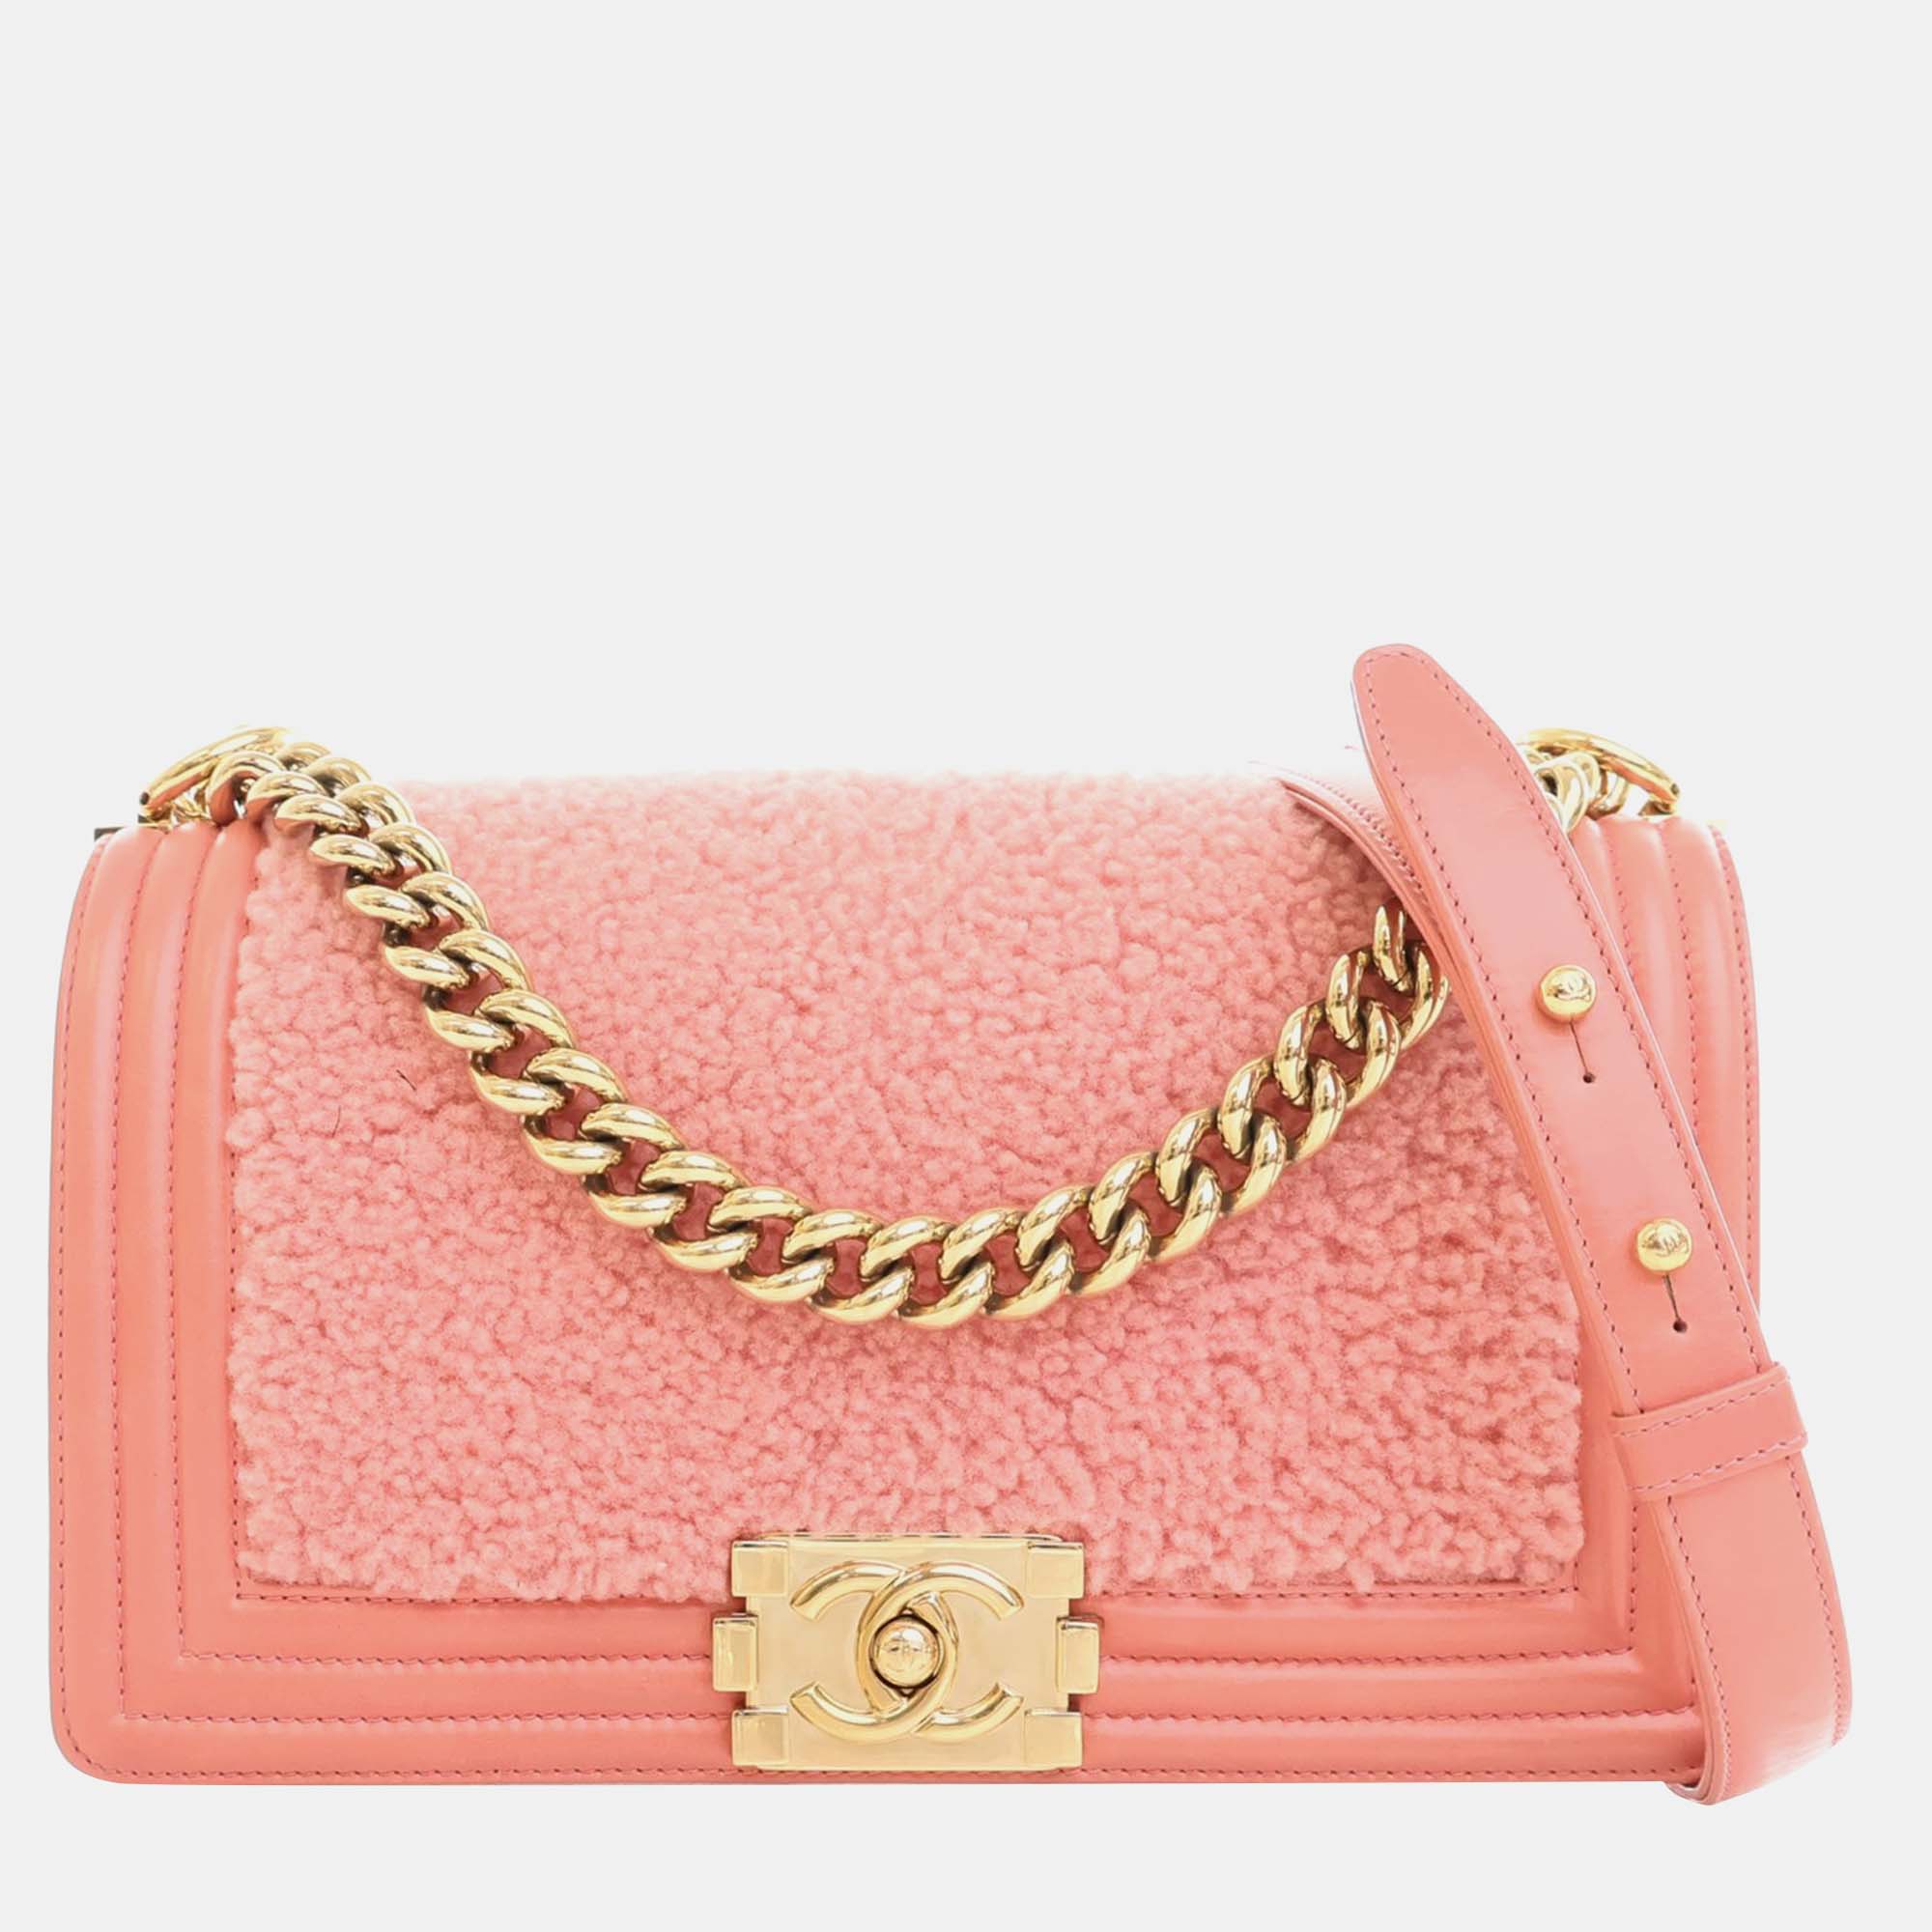 Chanel pink leather medium boy shoulder bags